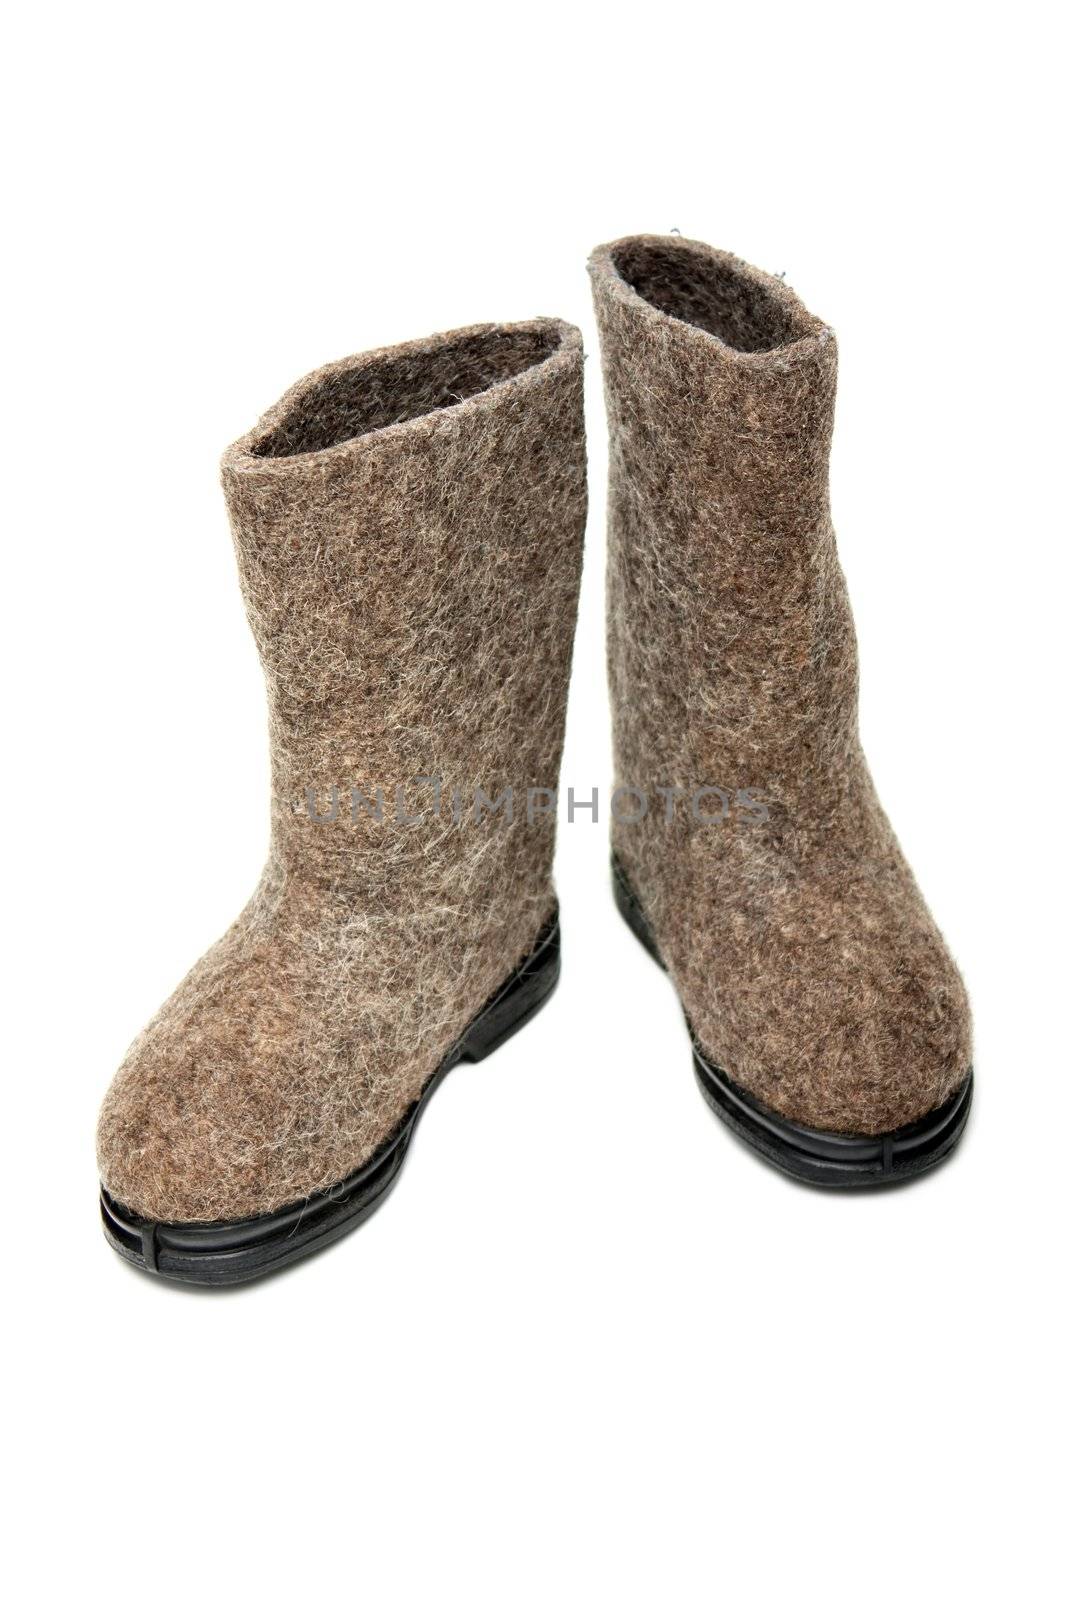 Russian traditional winter felt boot valenki shoes